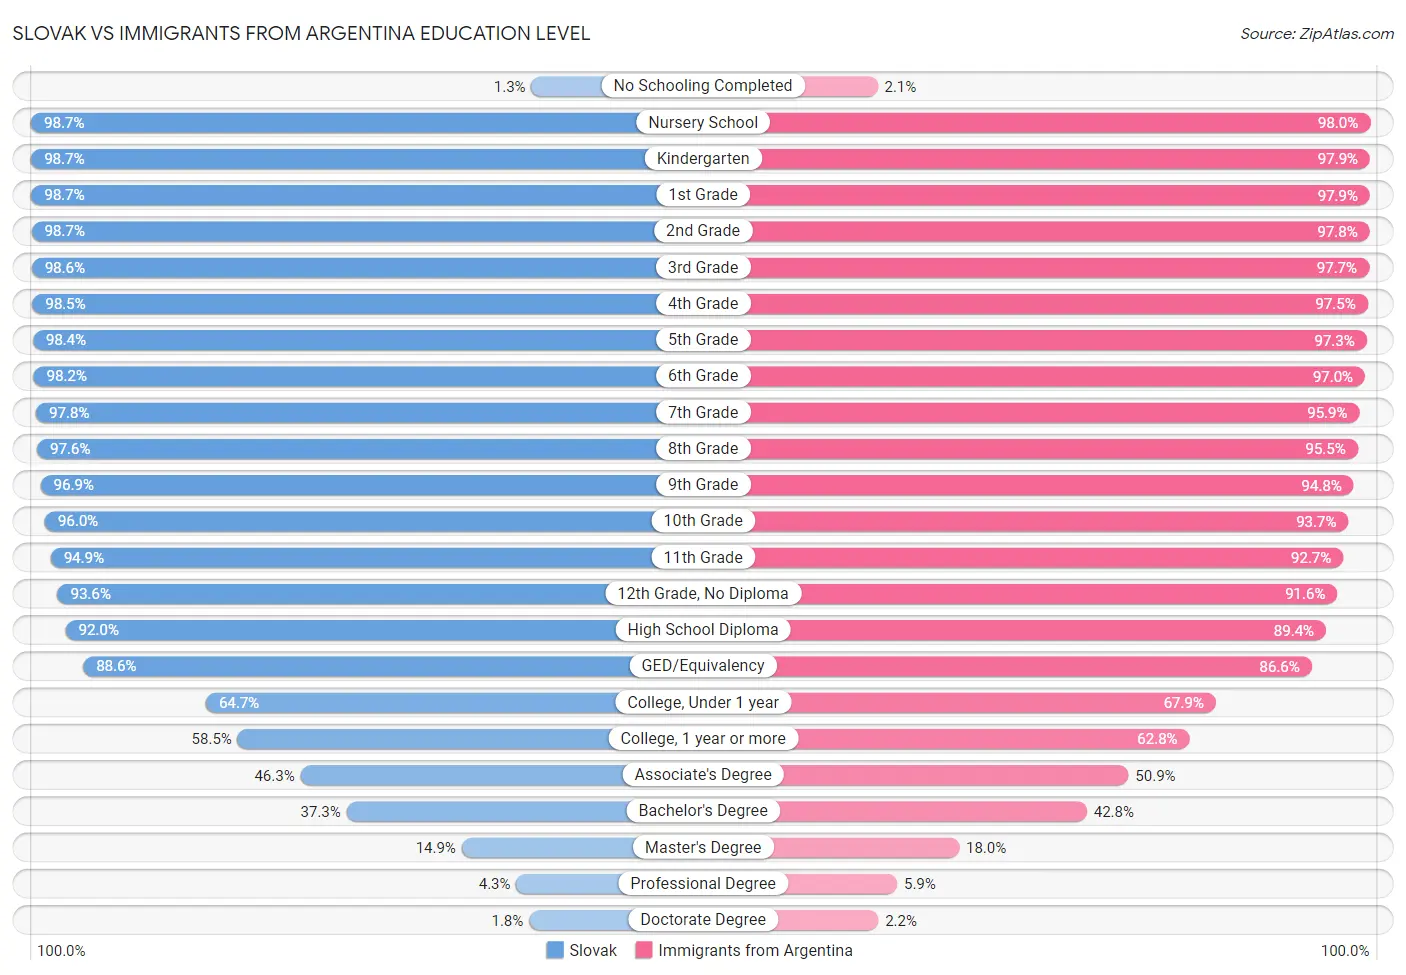 Slovak vs Immigrants from Argentina Education Level